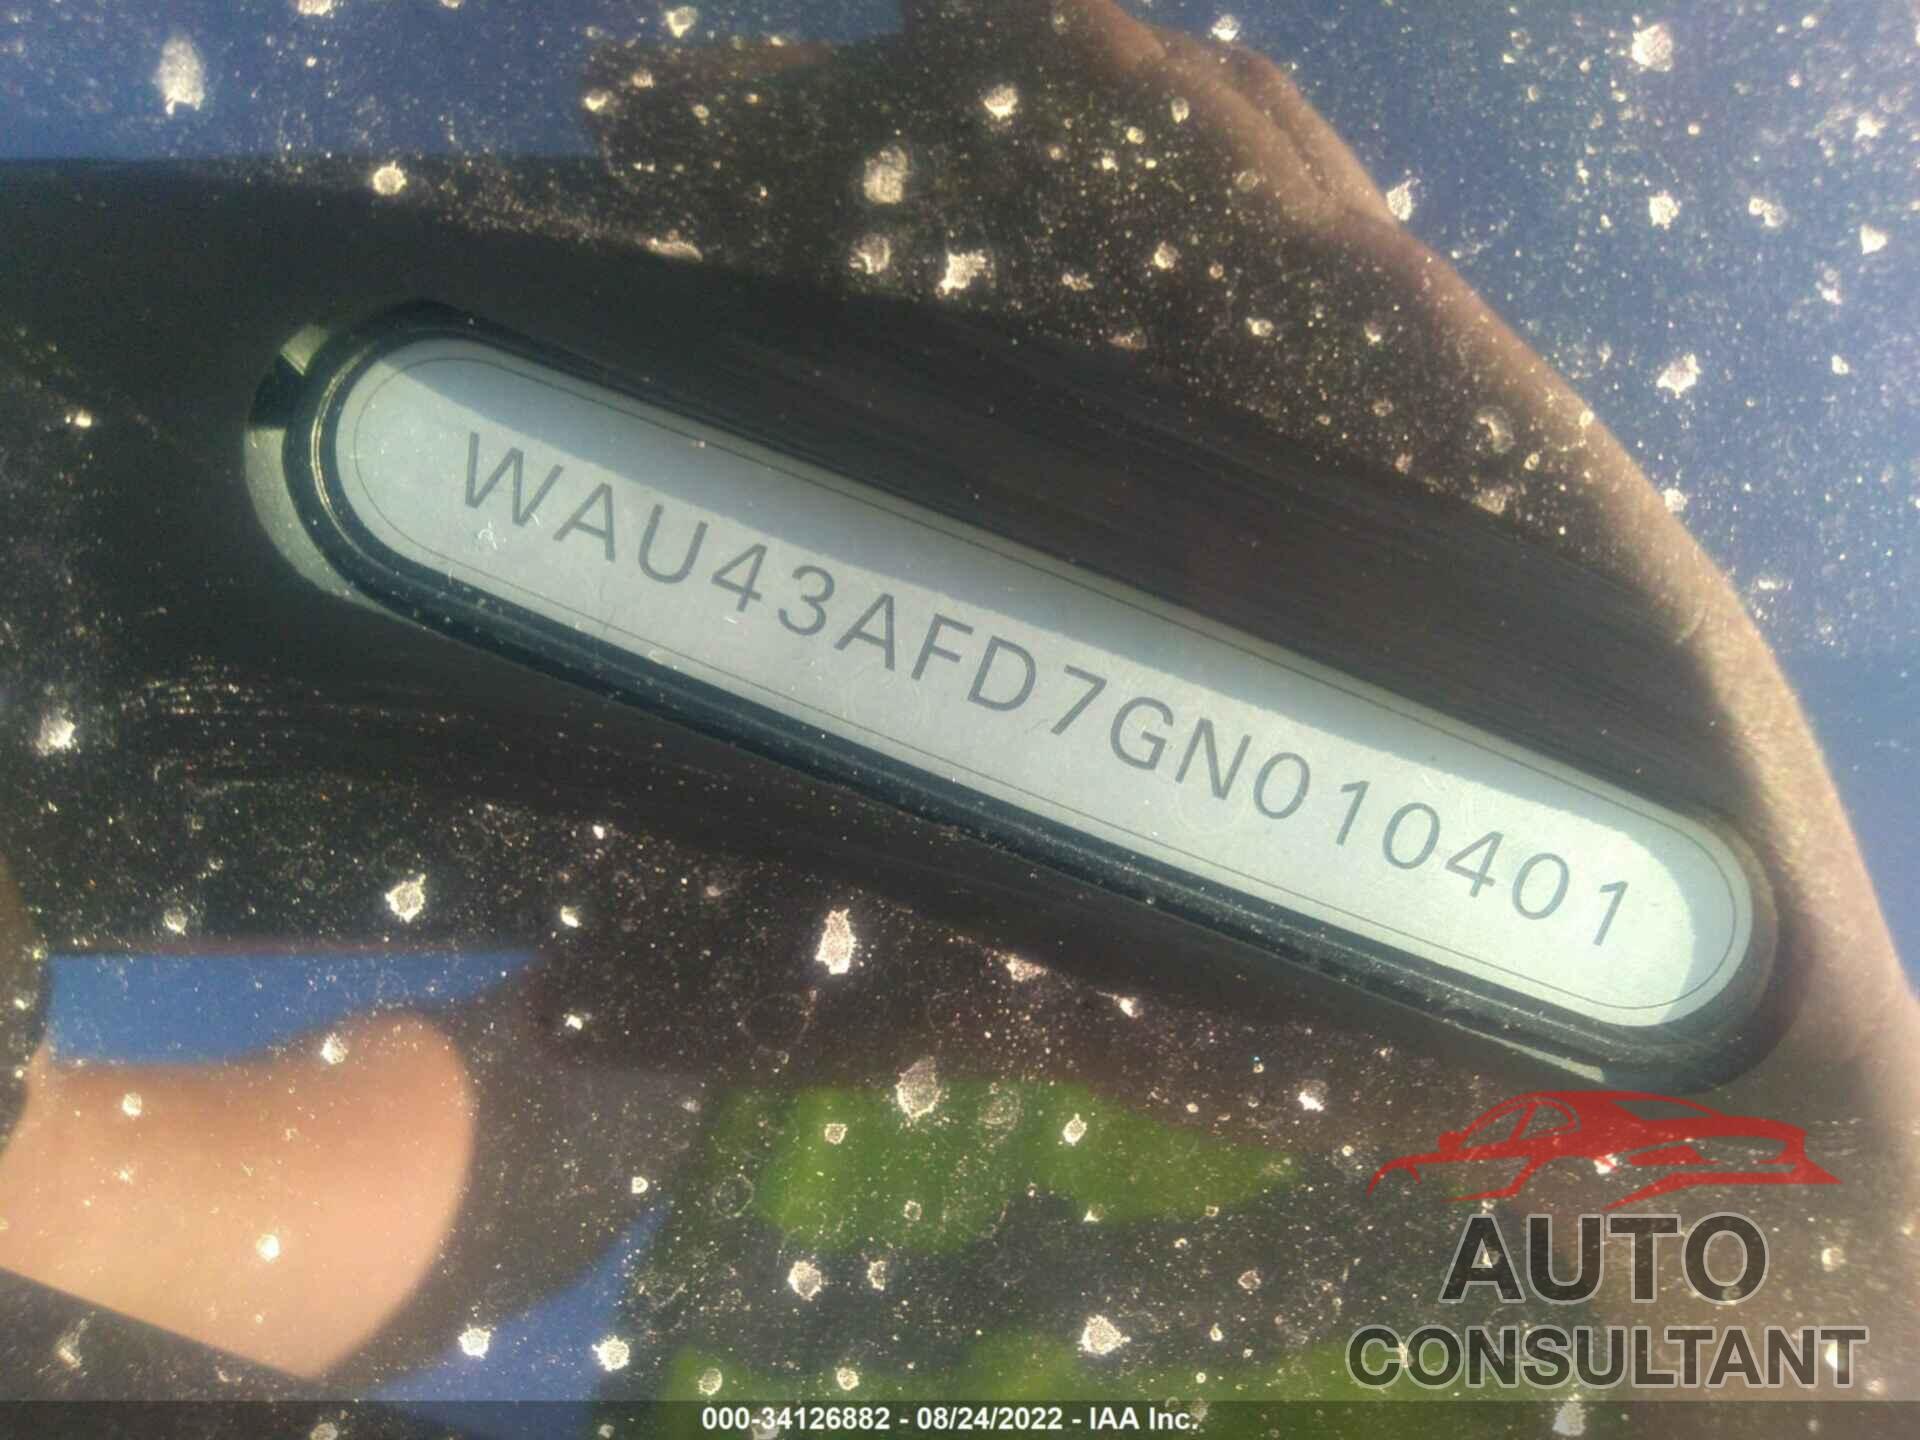 AUDI A8 L 2016 - WAU43AFD7GN010401